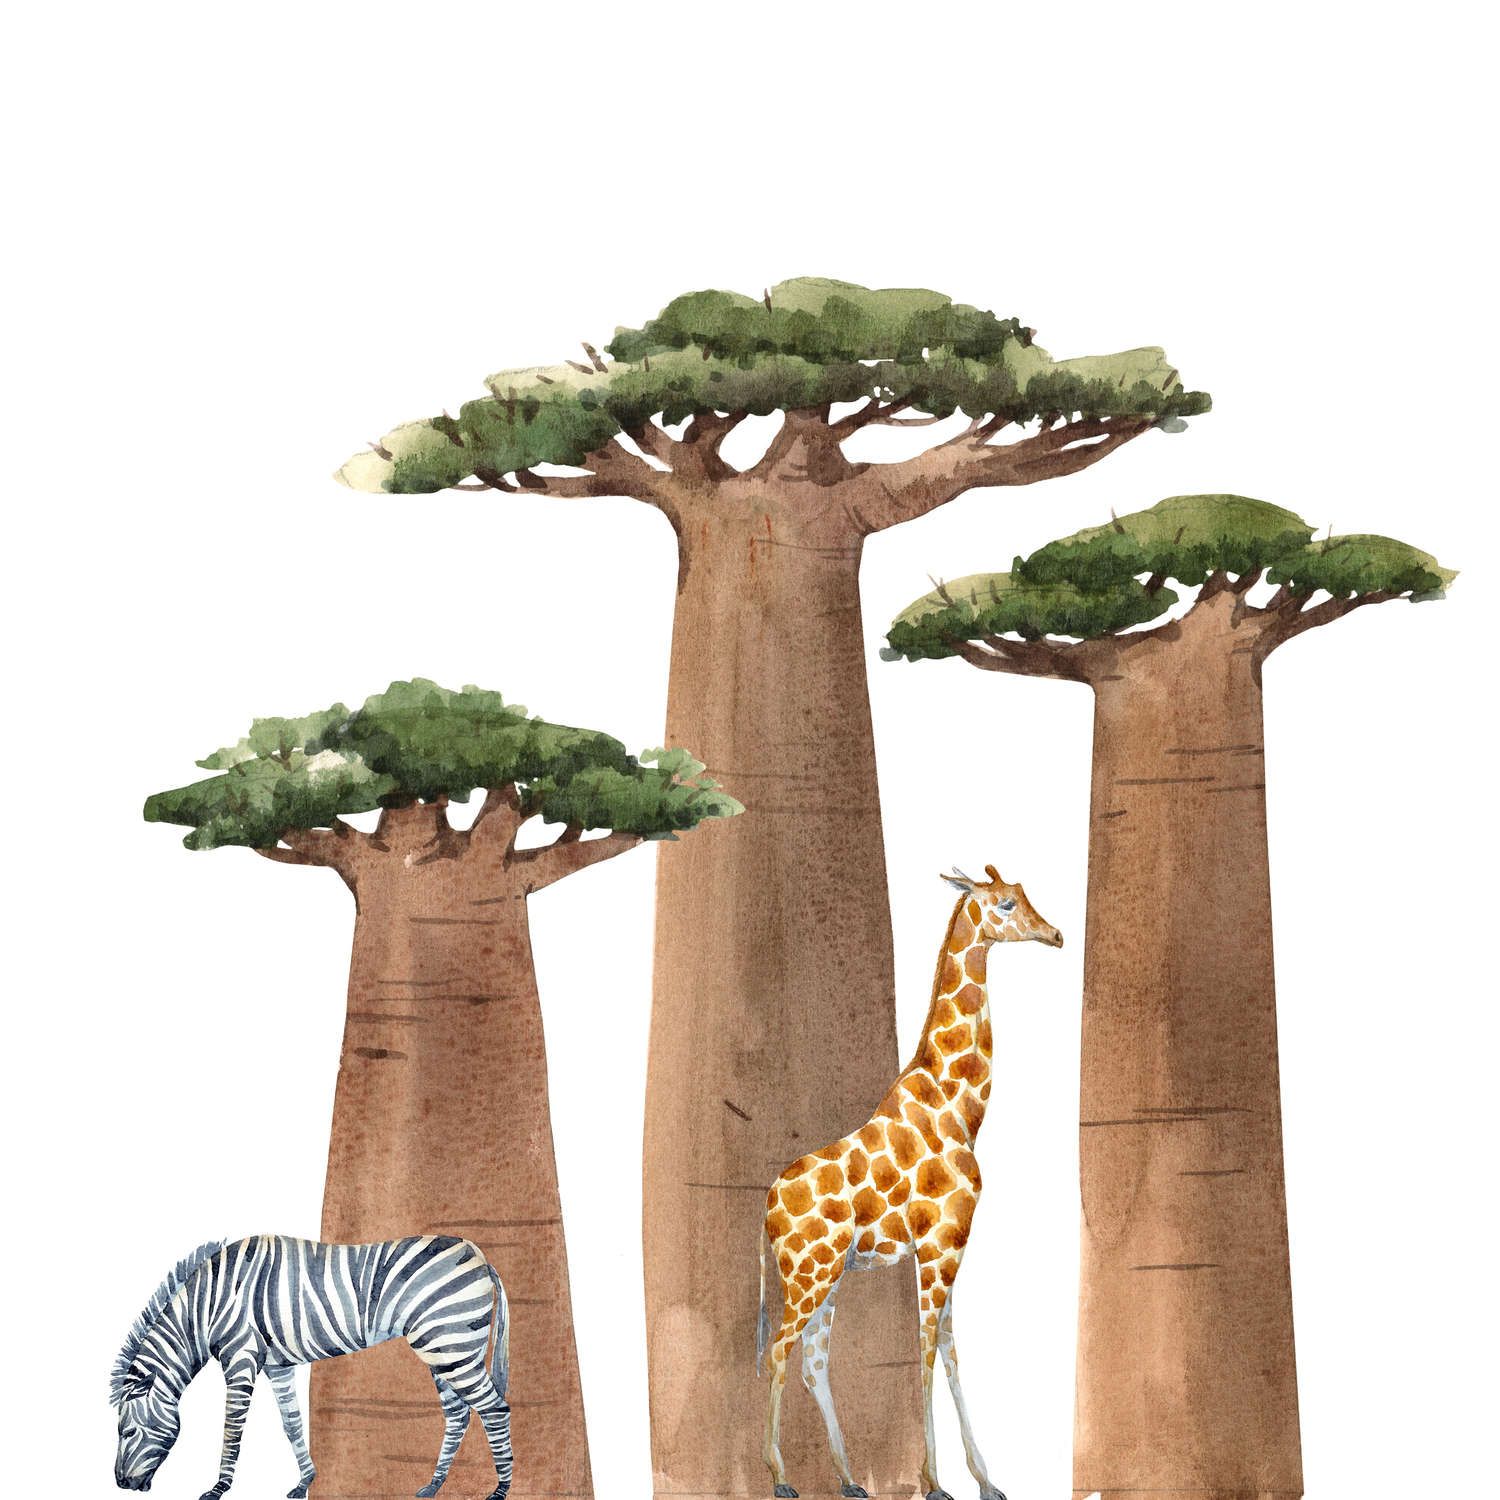             Photo wallpaper Savannah with Giraffe and Zebra - Smooth & slightly shiny non-woven
        